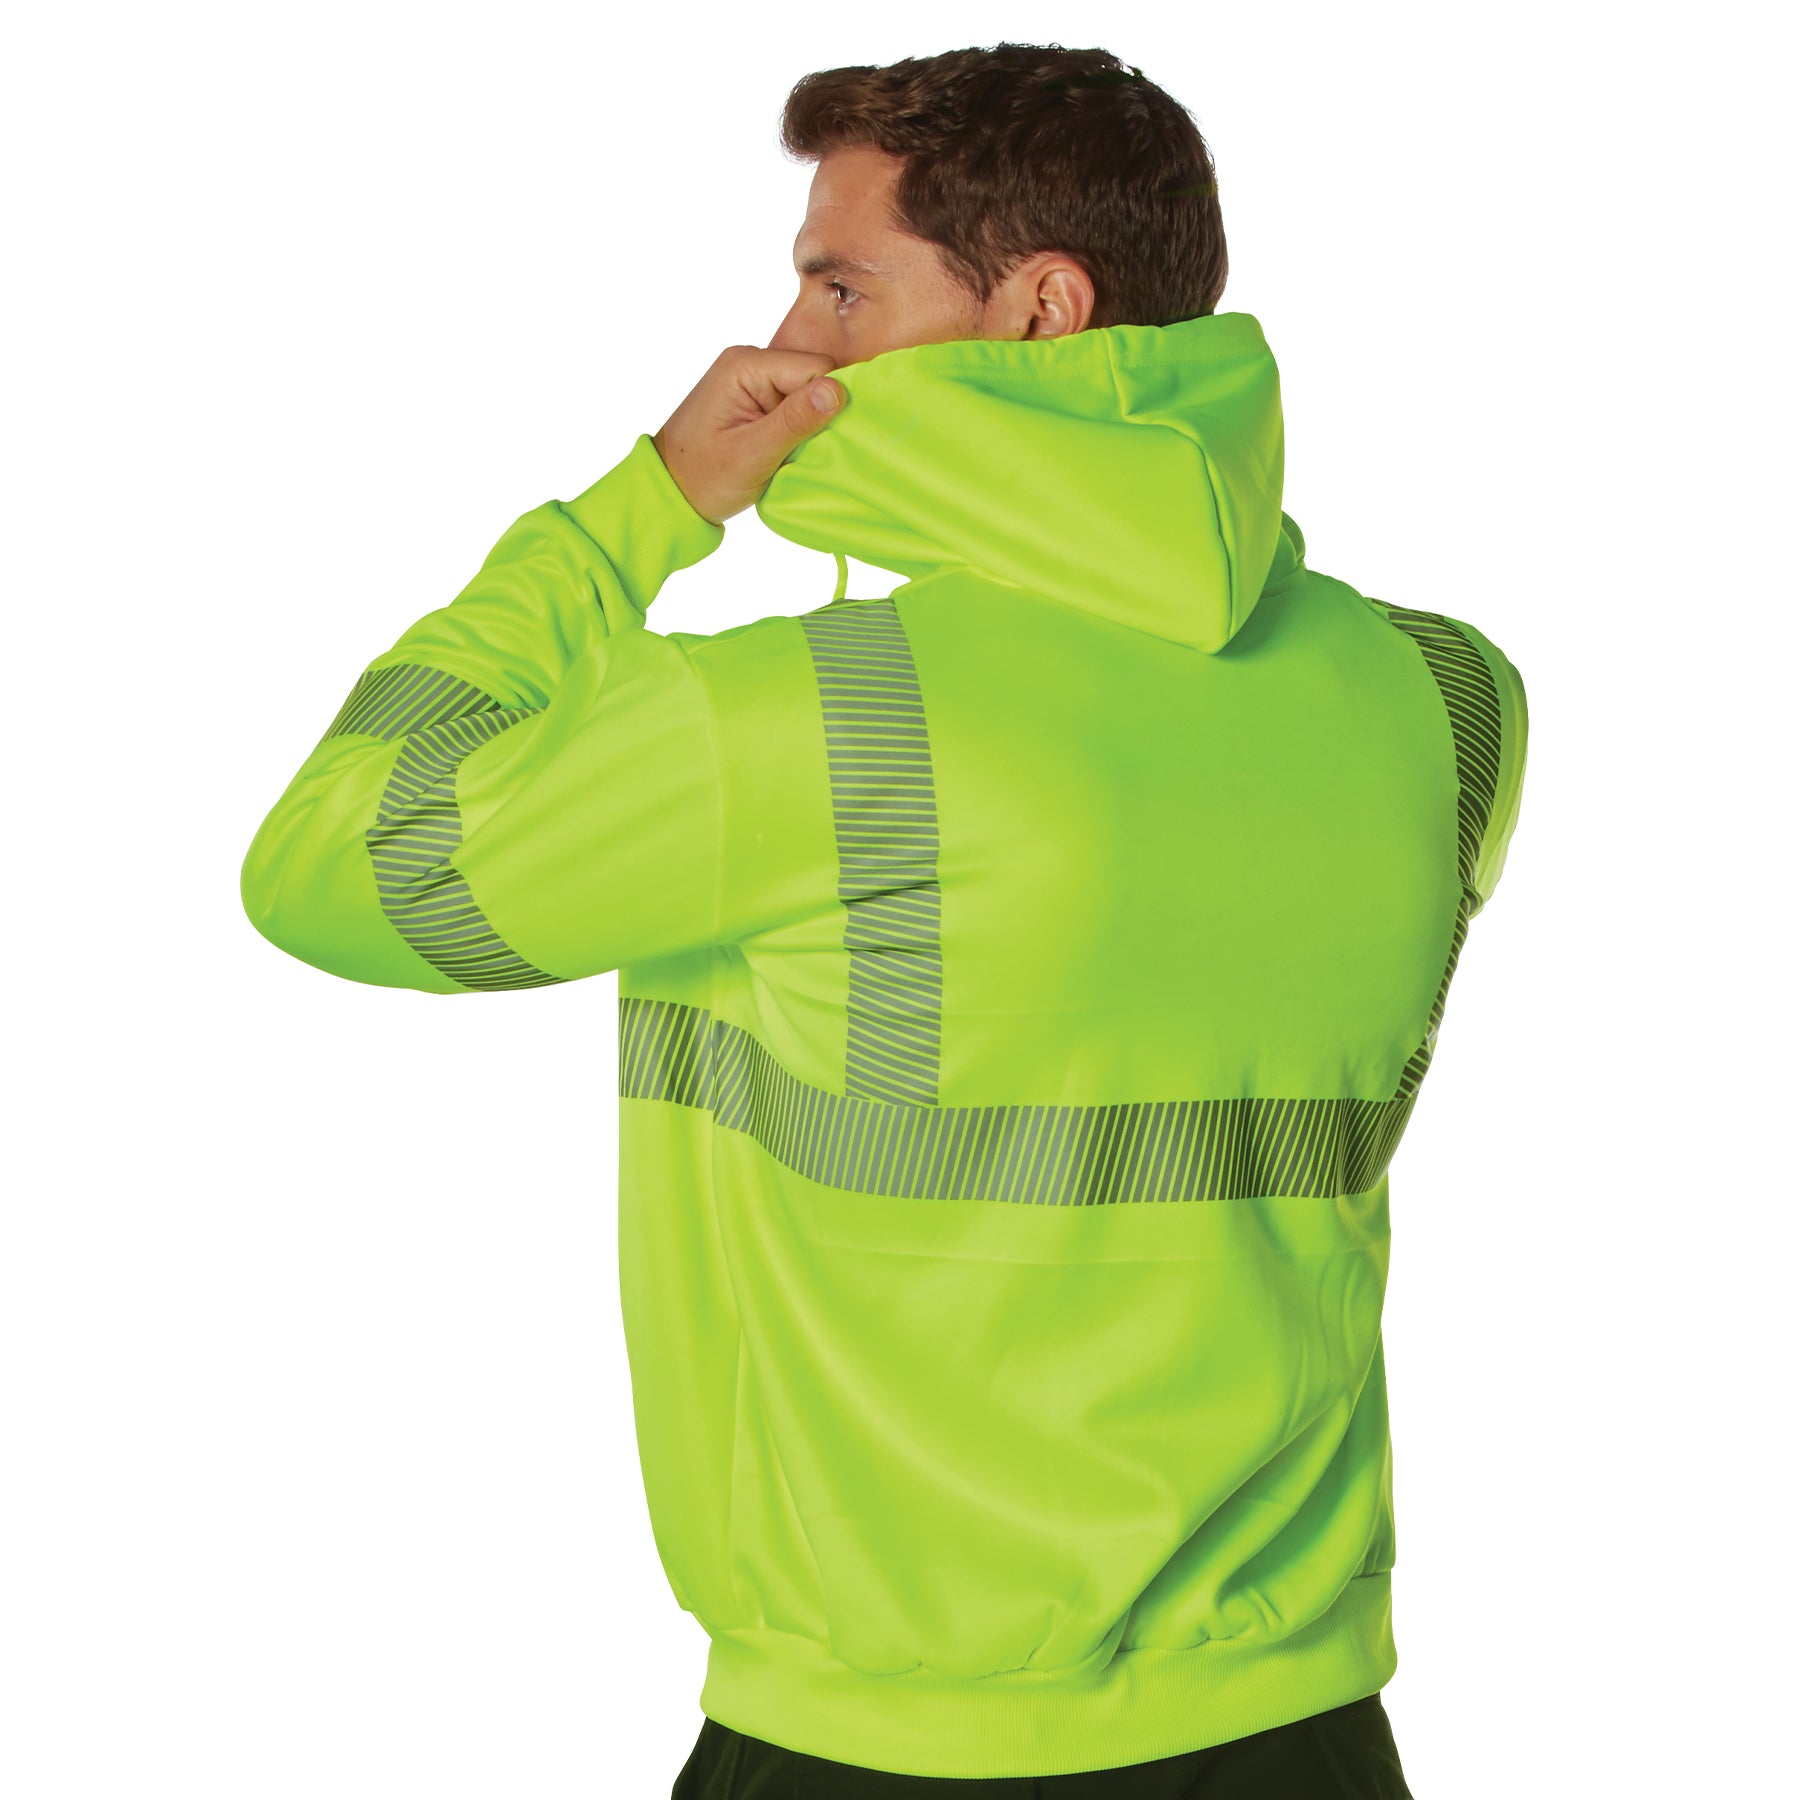 [Public Safety] Poly Security HI-Visibility Performance Zipper Sweatshirts